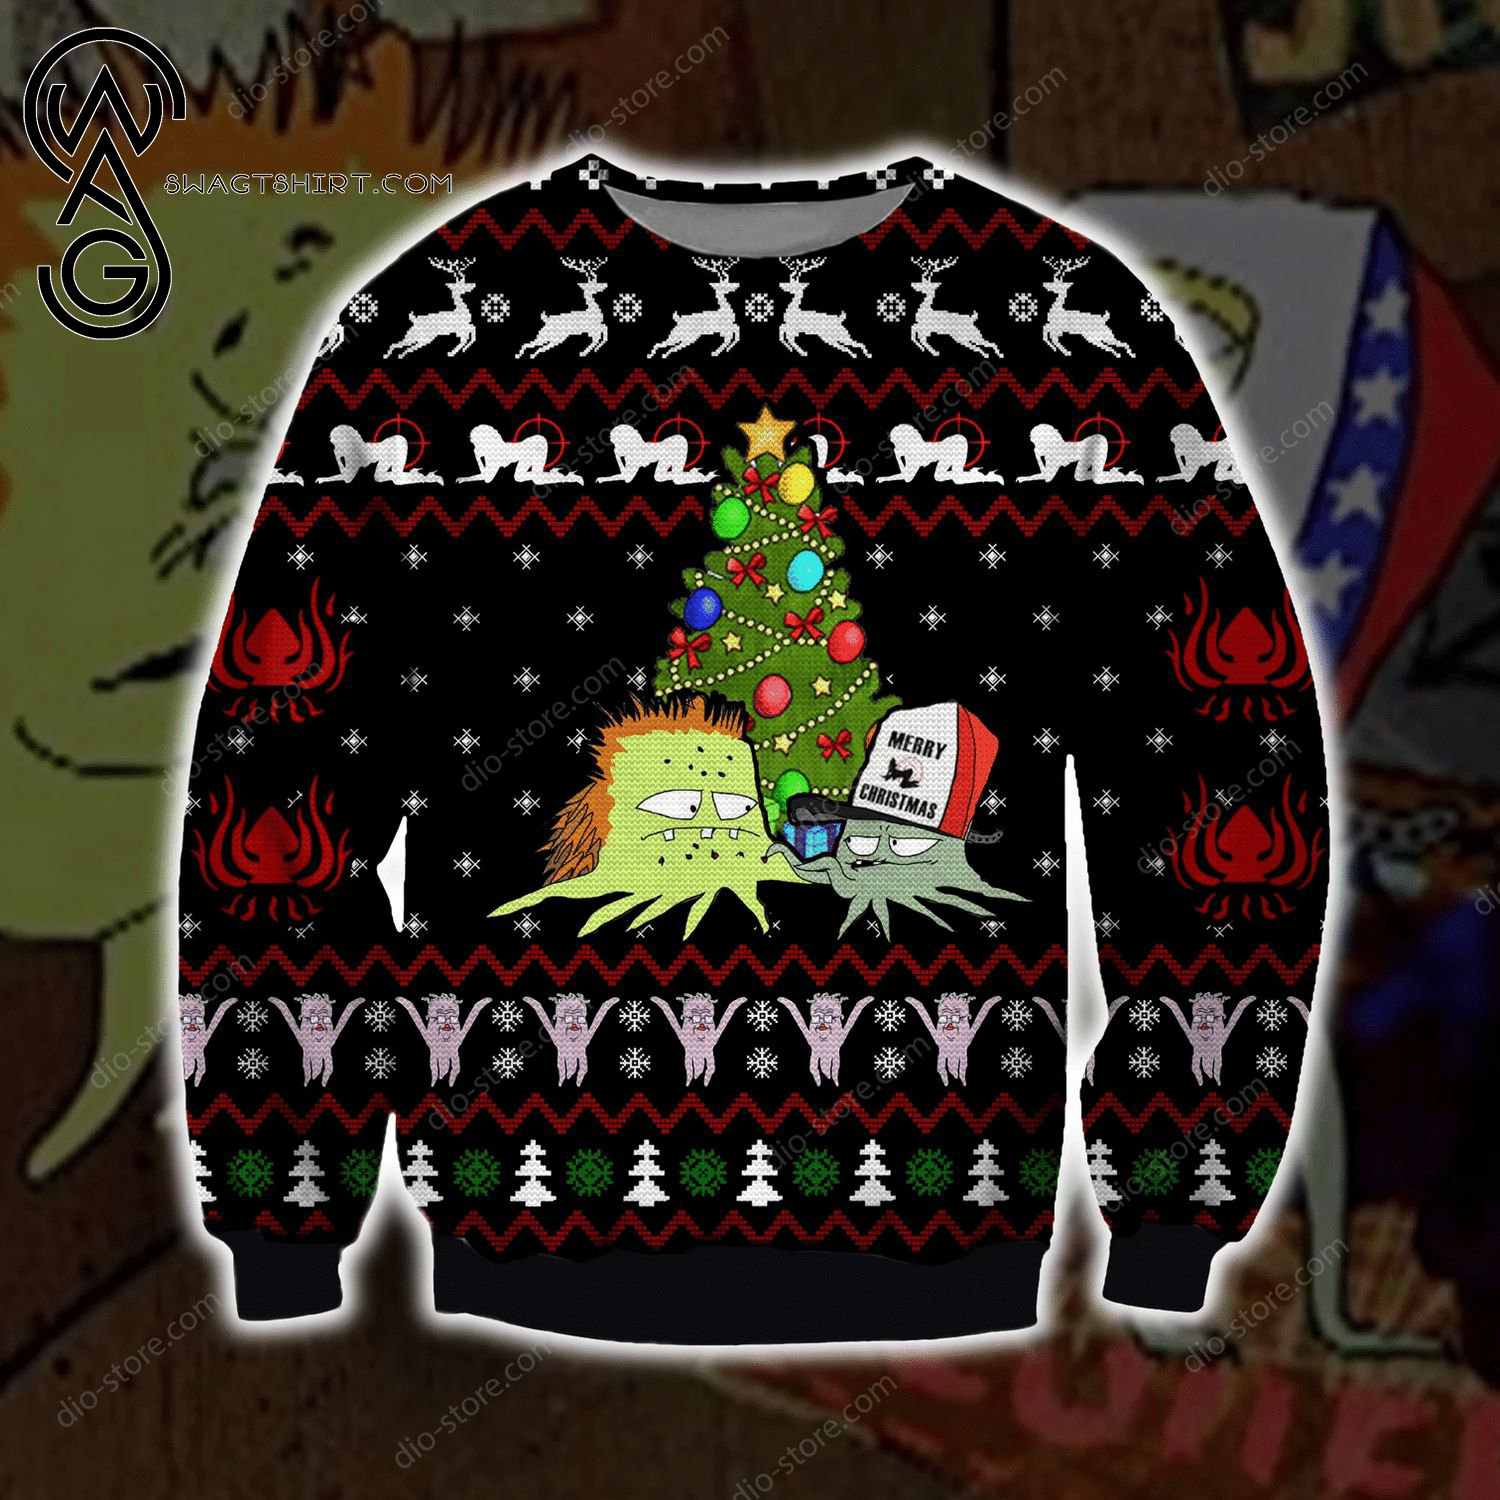 TV Show Squidbillies Full Print Ugly Christmas Sweater